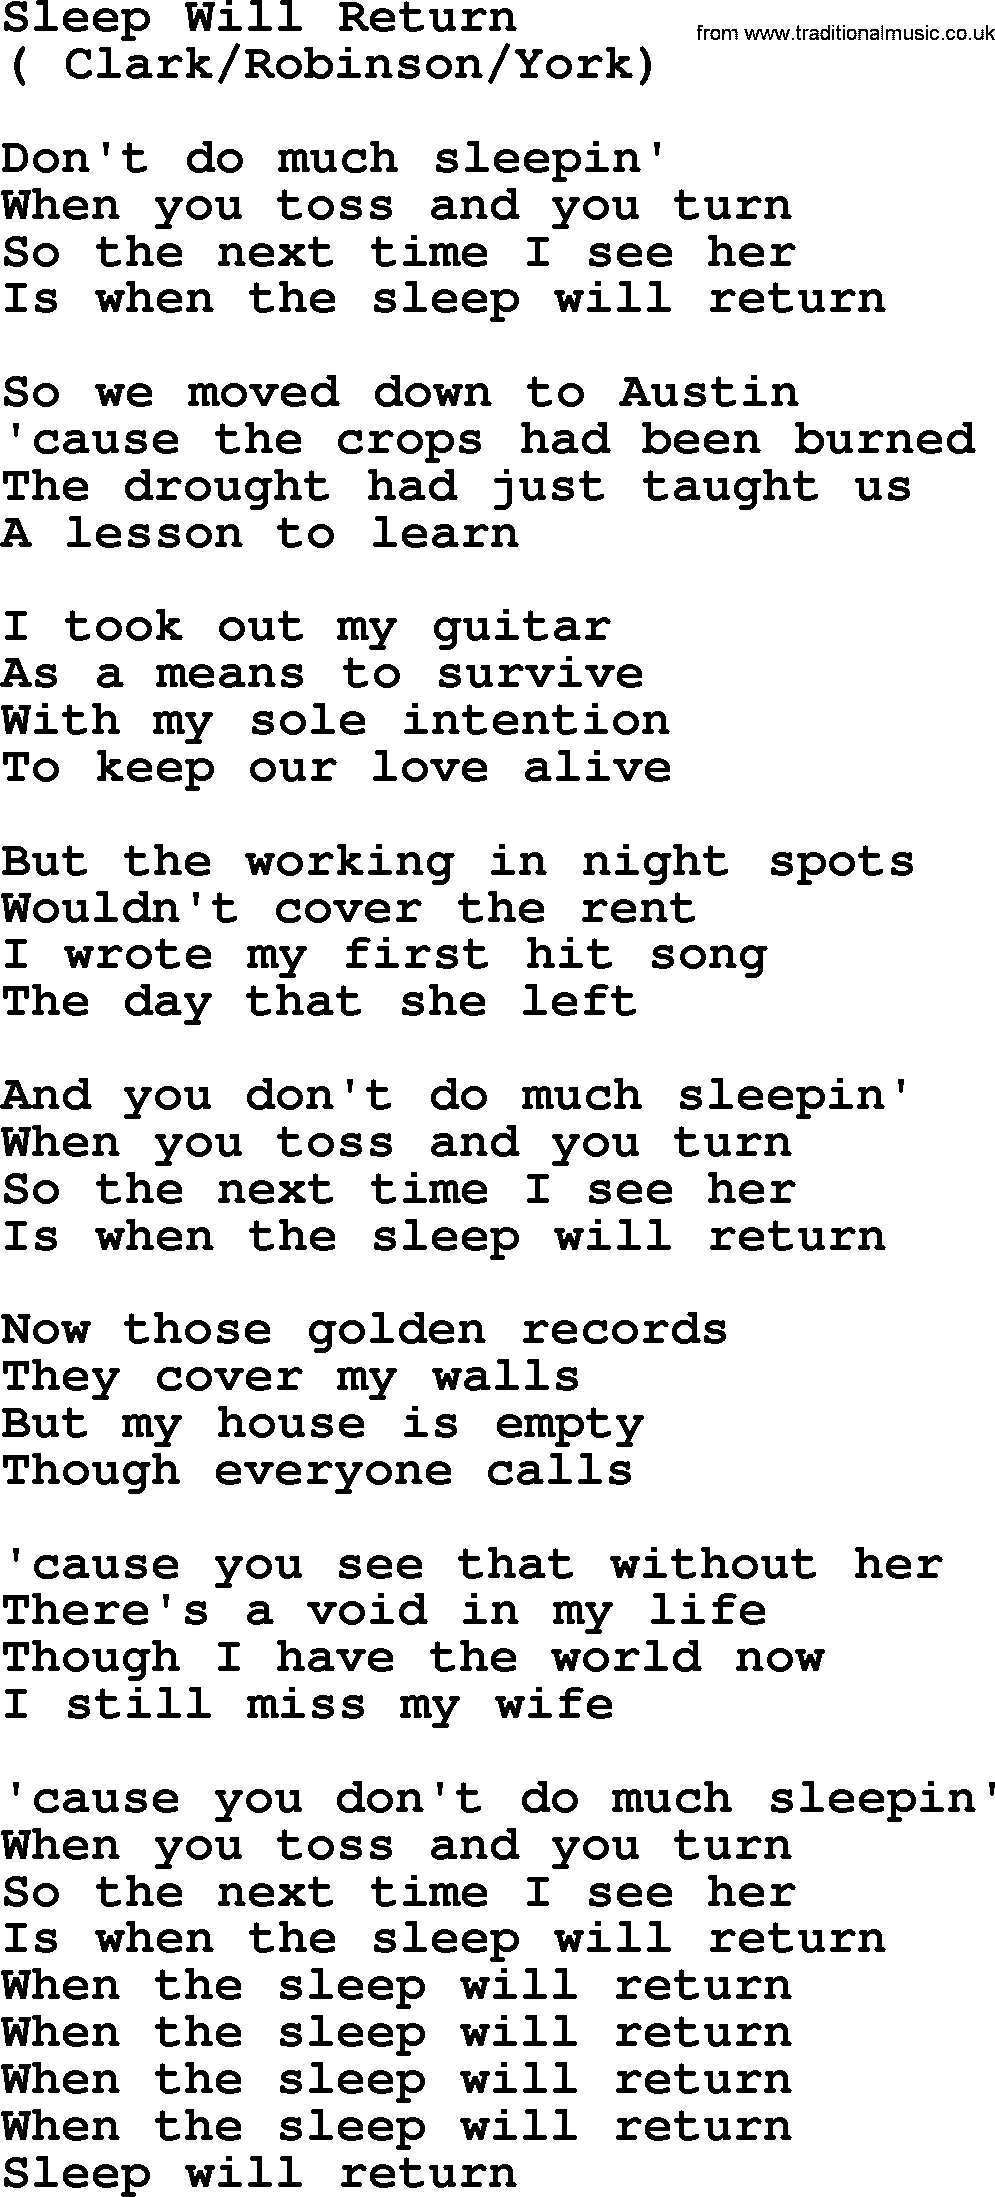 The Byrds song Sleep Will Return, lyrics